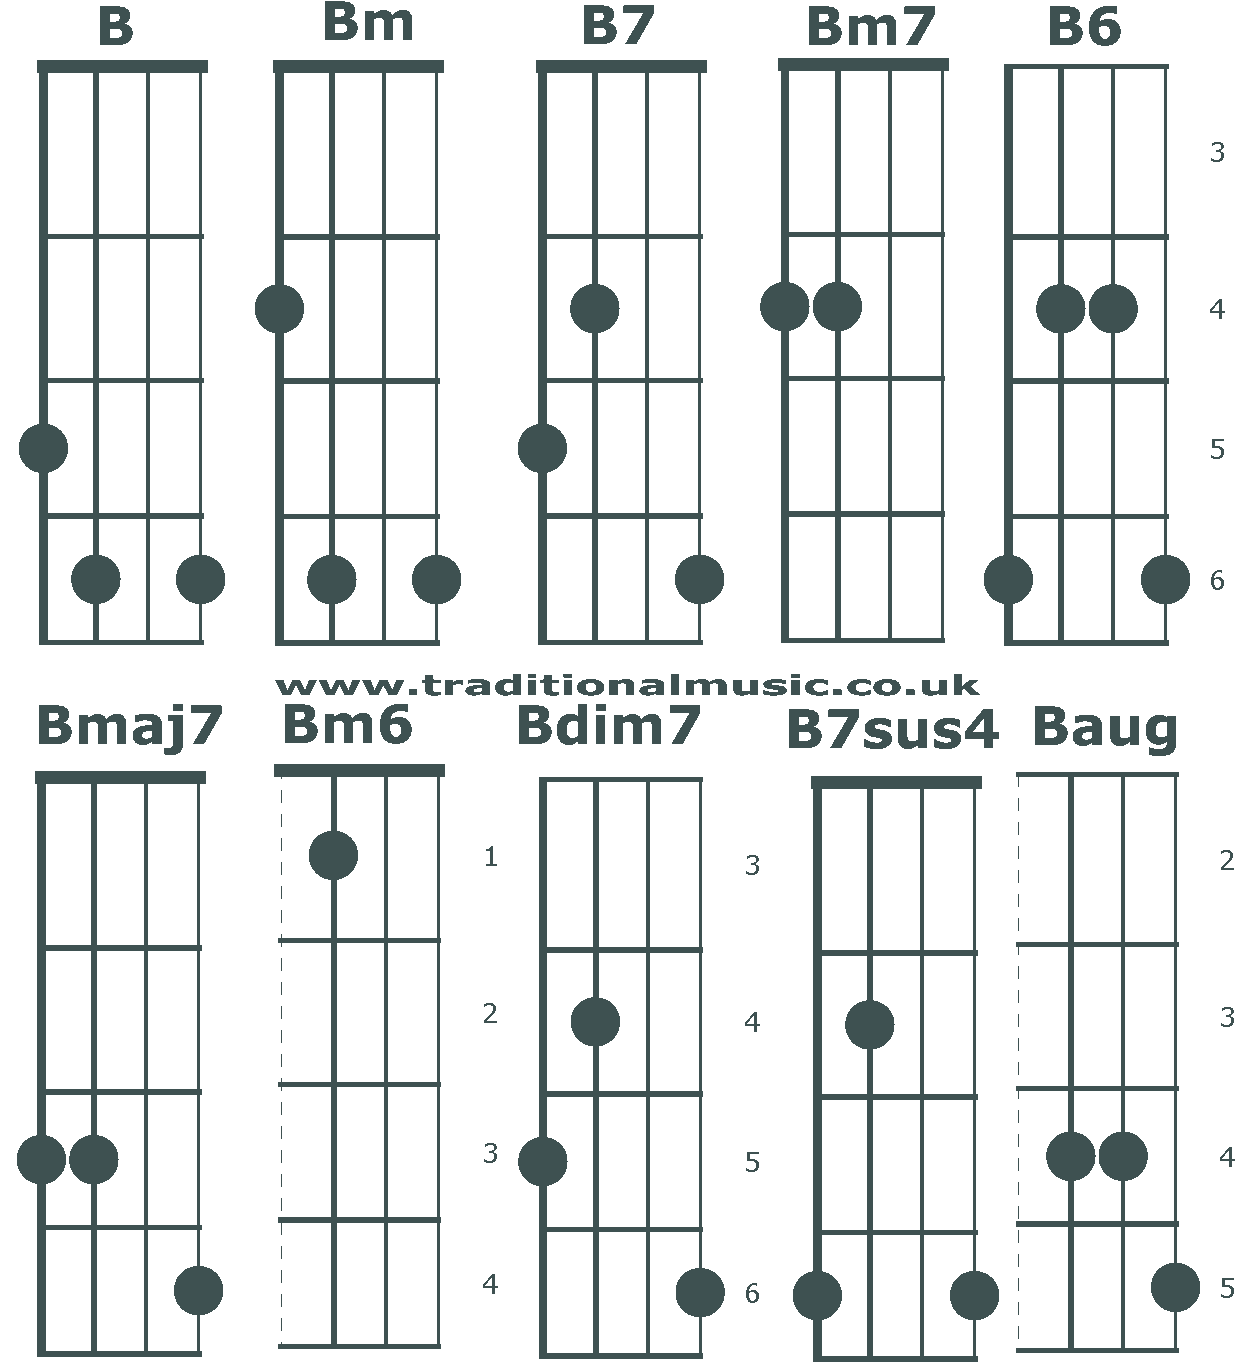 b7 banjo chord - newmanins.com.